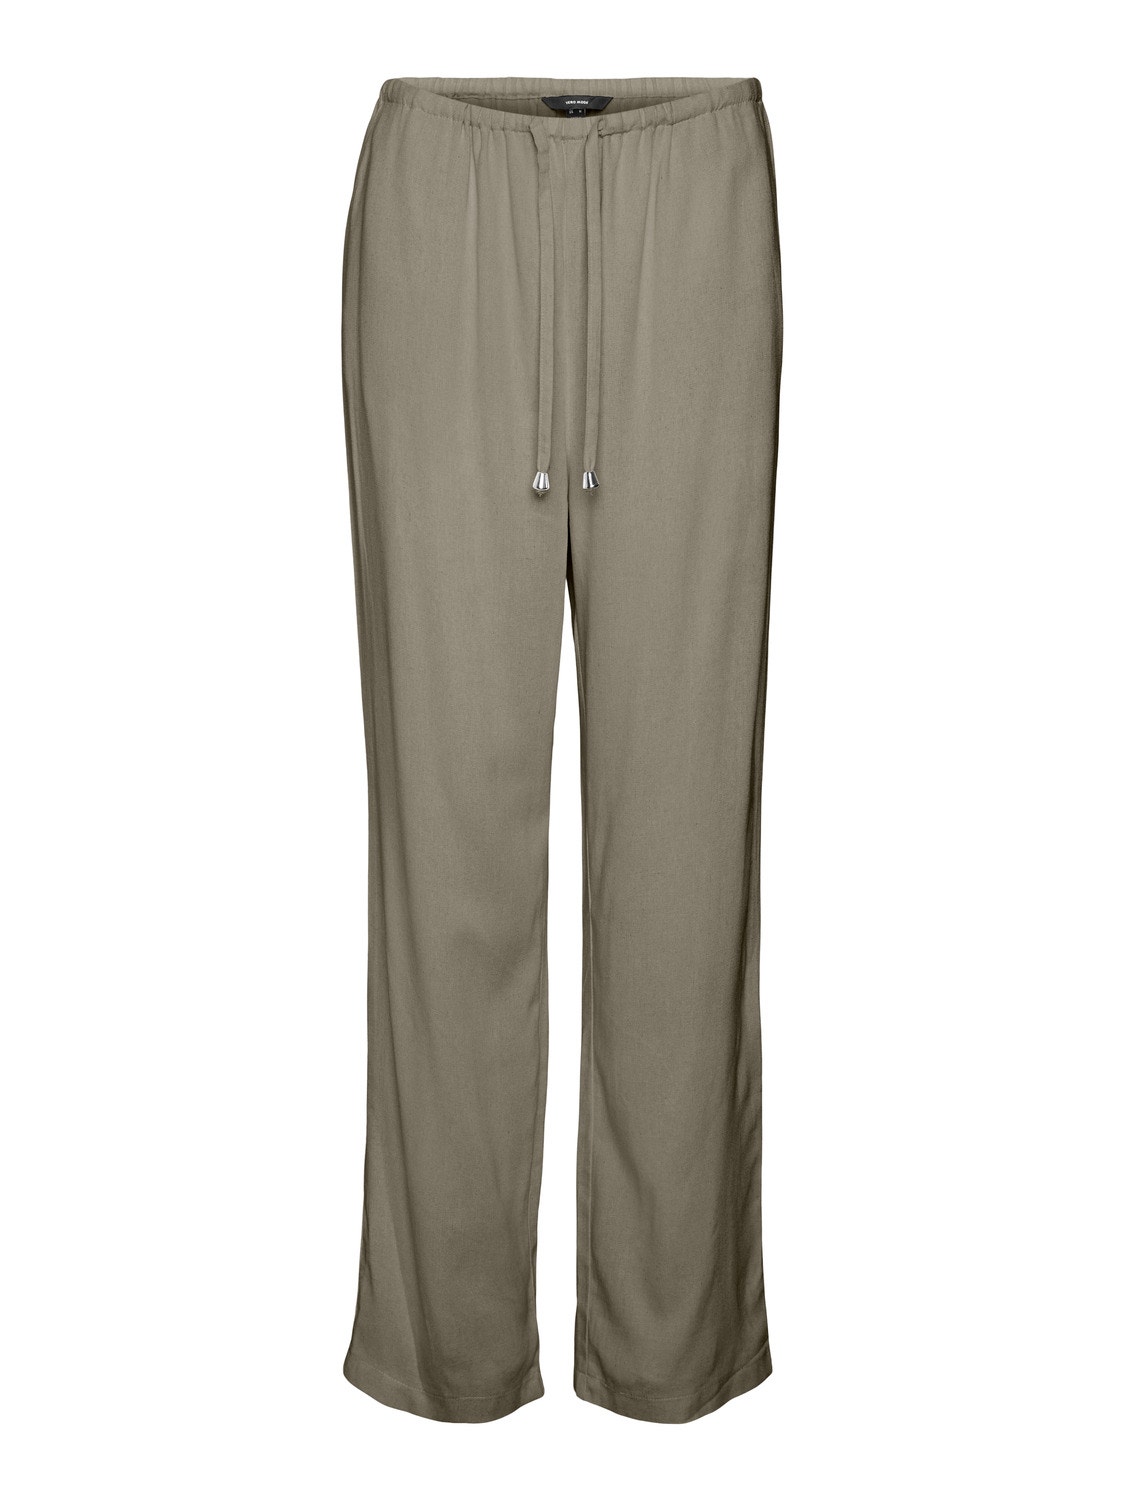 Vero Moda VMDINNA Trousers -Laurel Oak - 10313929